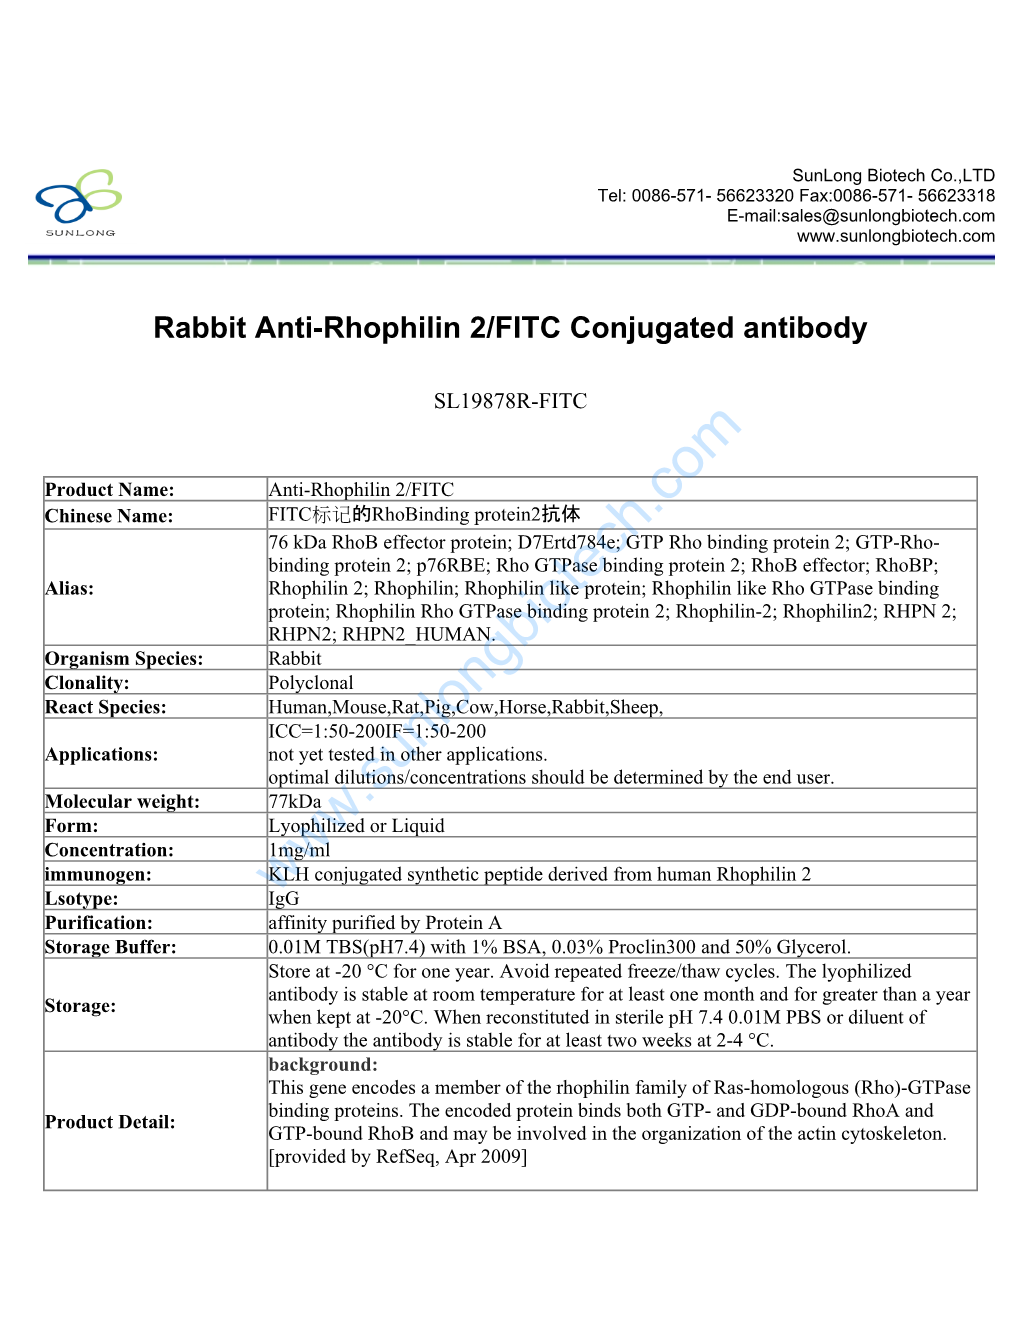 Rabbit Anti-Rhophilin 2/FITC Conjugated Antibody-SL19878R